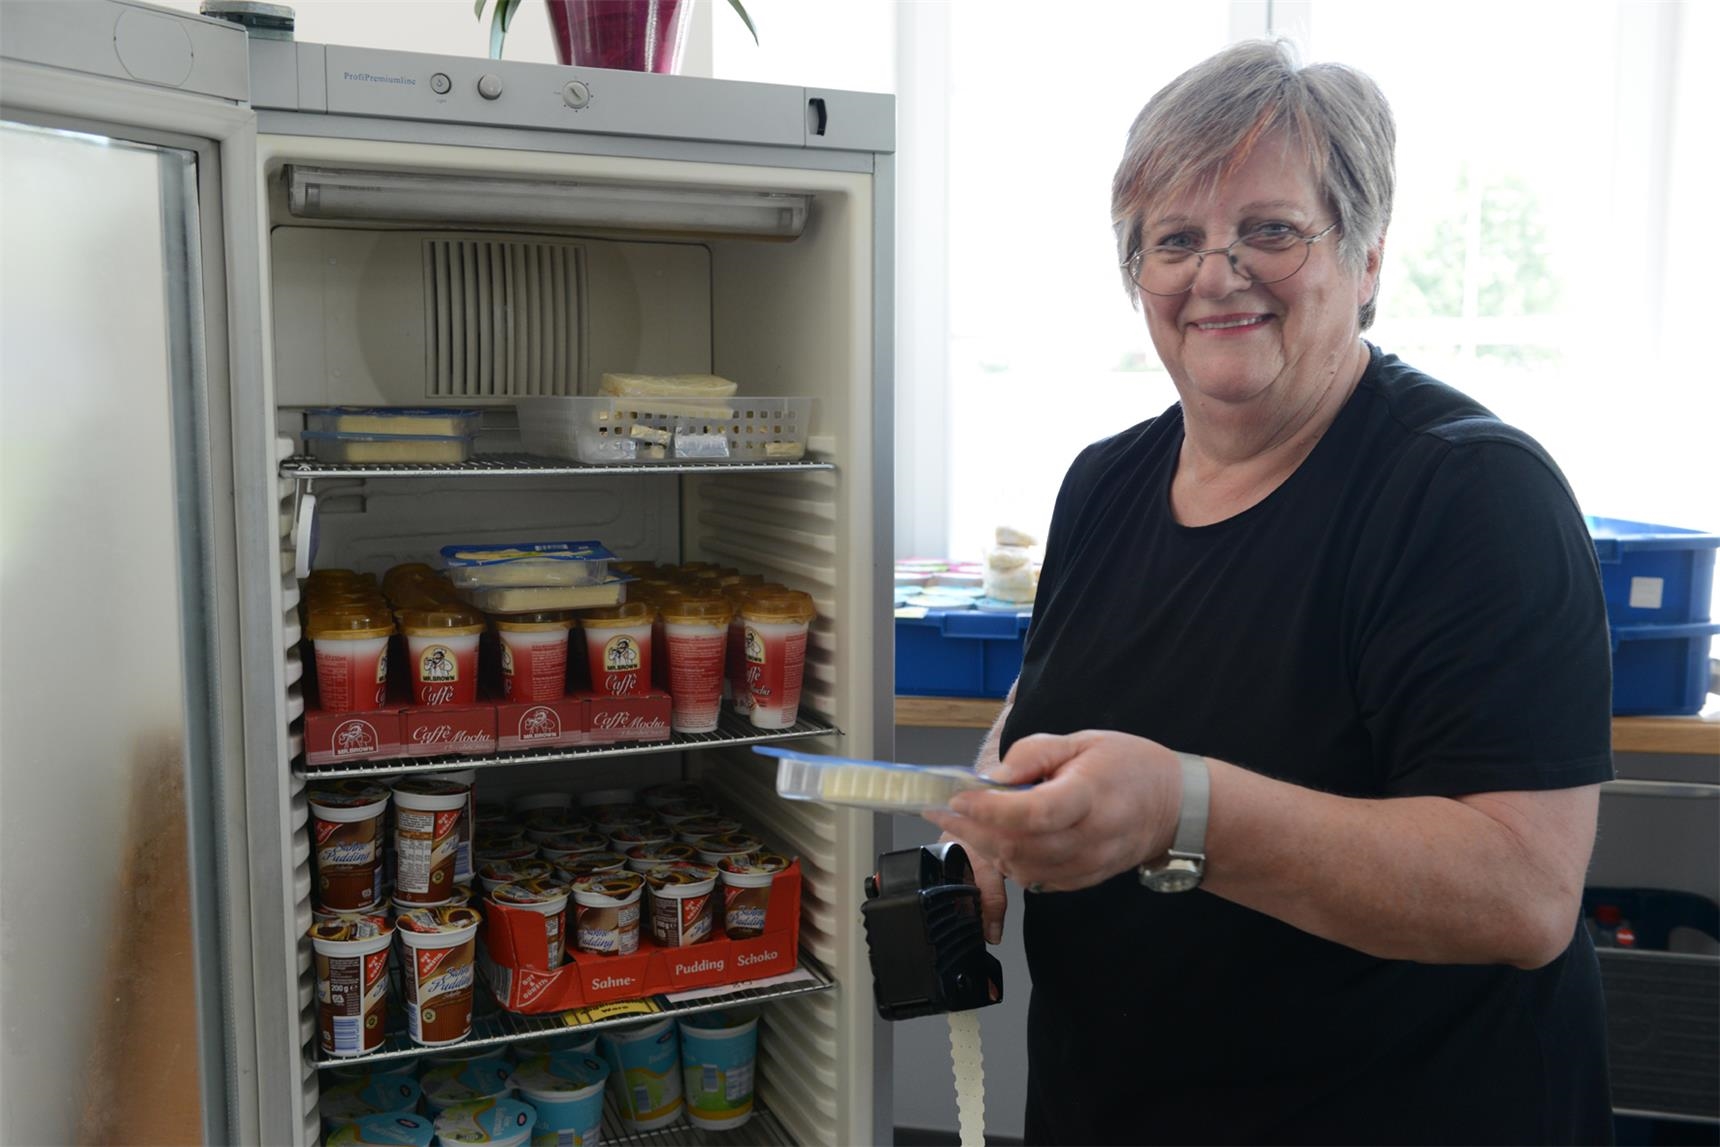 Frau etikettiert am Kühlschrank